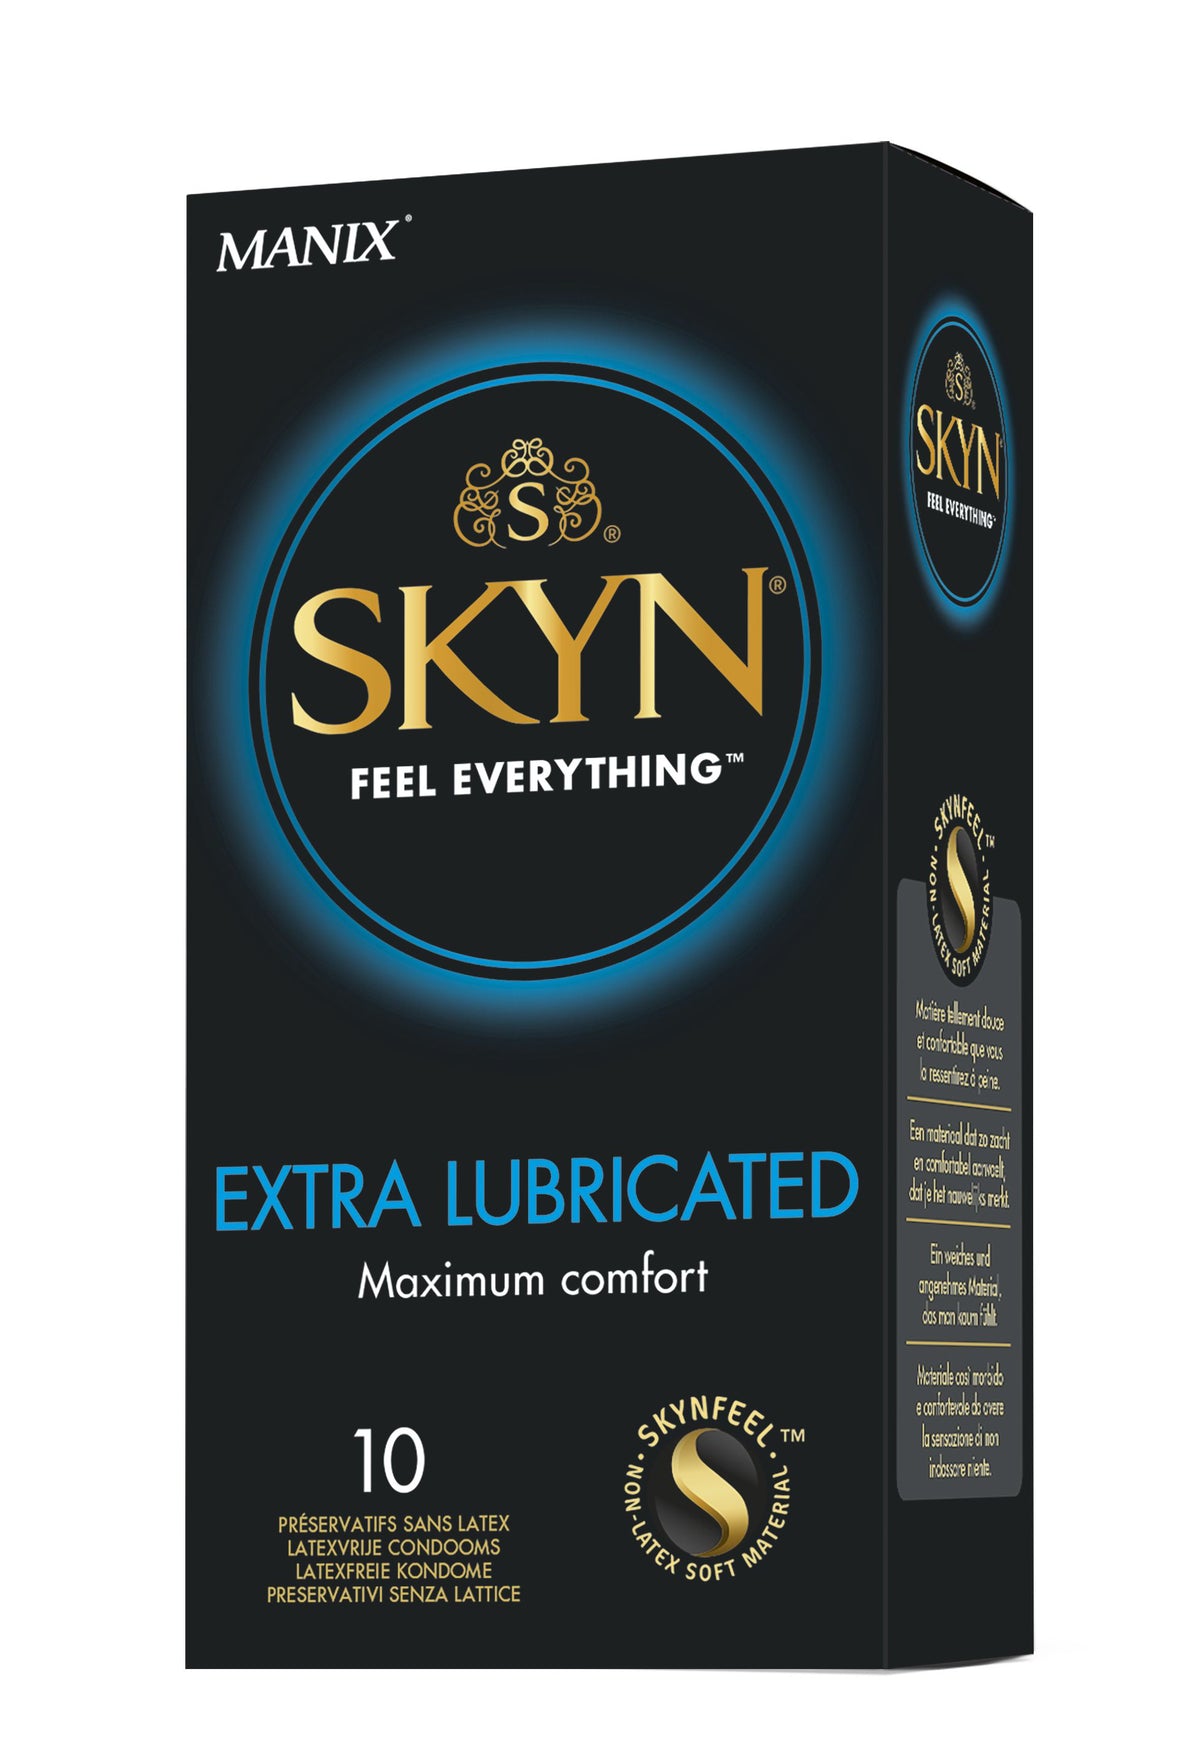 SKYN Kondom ohne Latex 10er Packung EXTRA FEUCHT